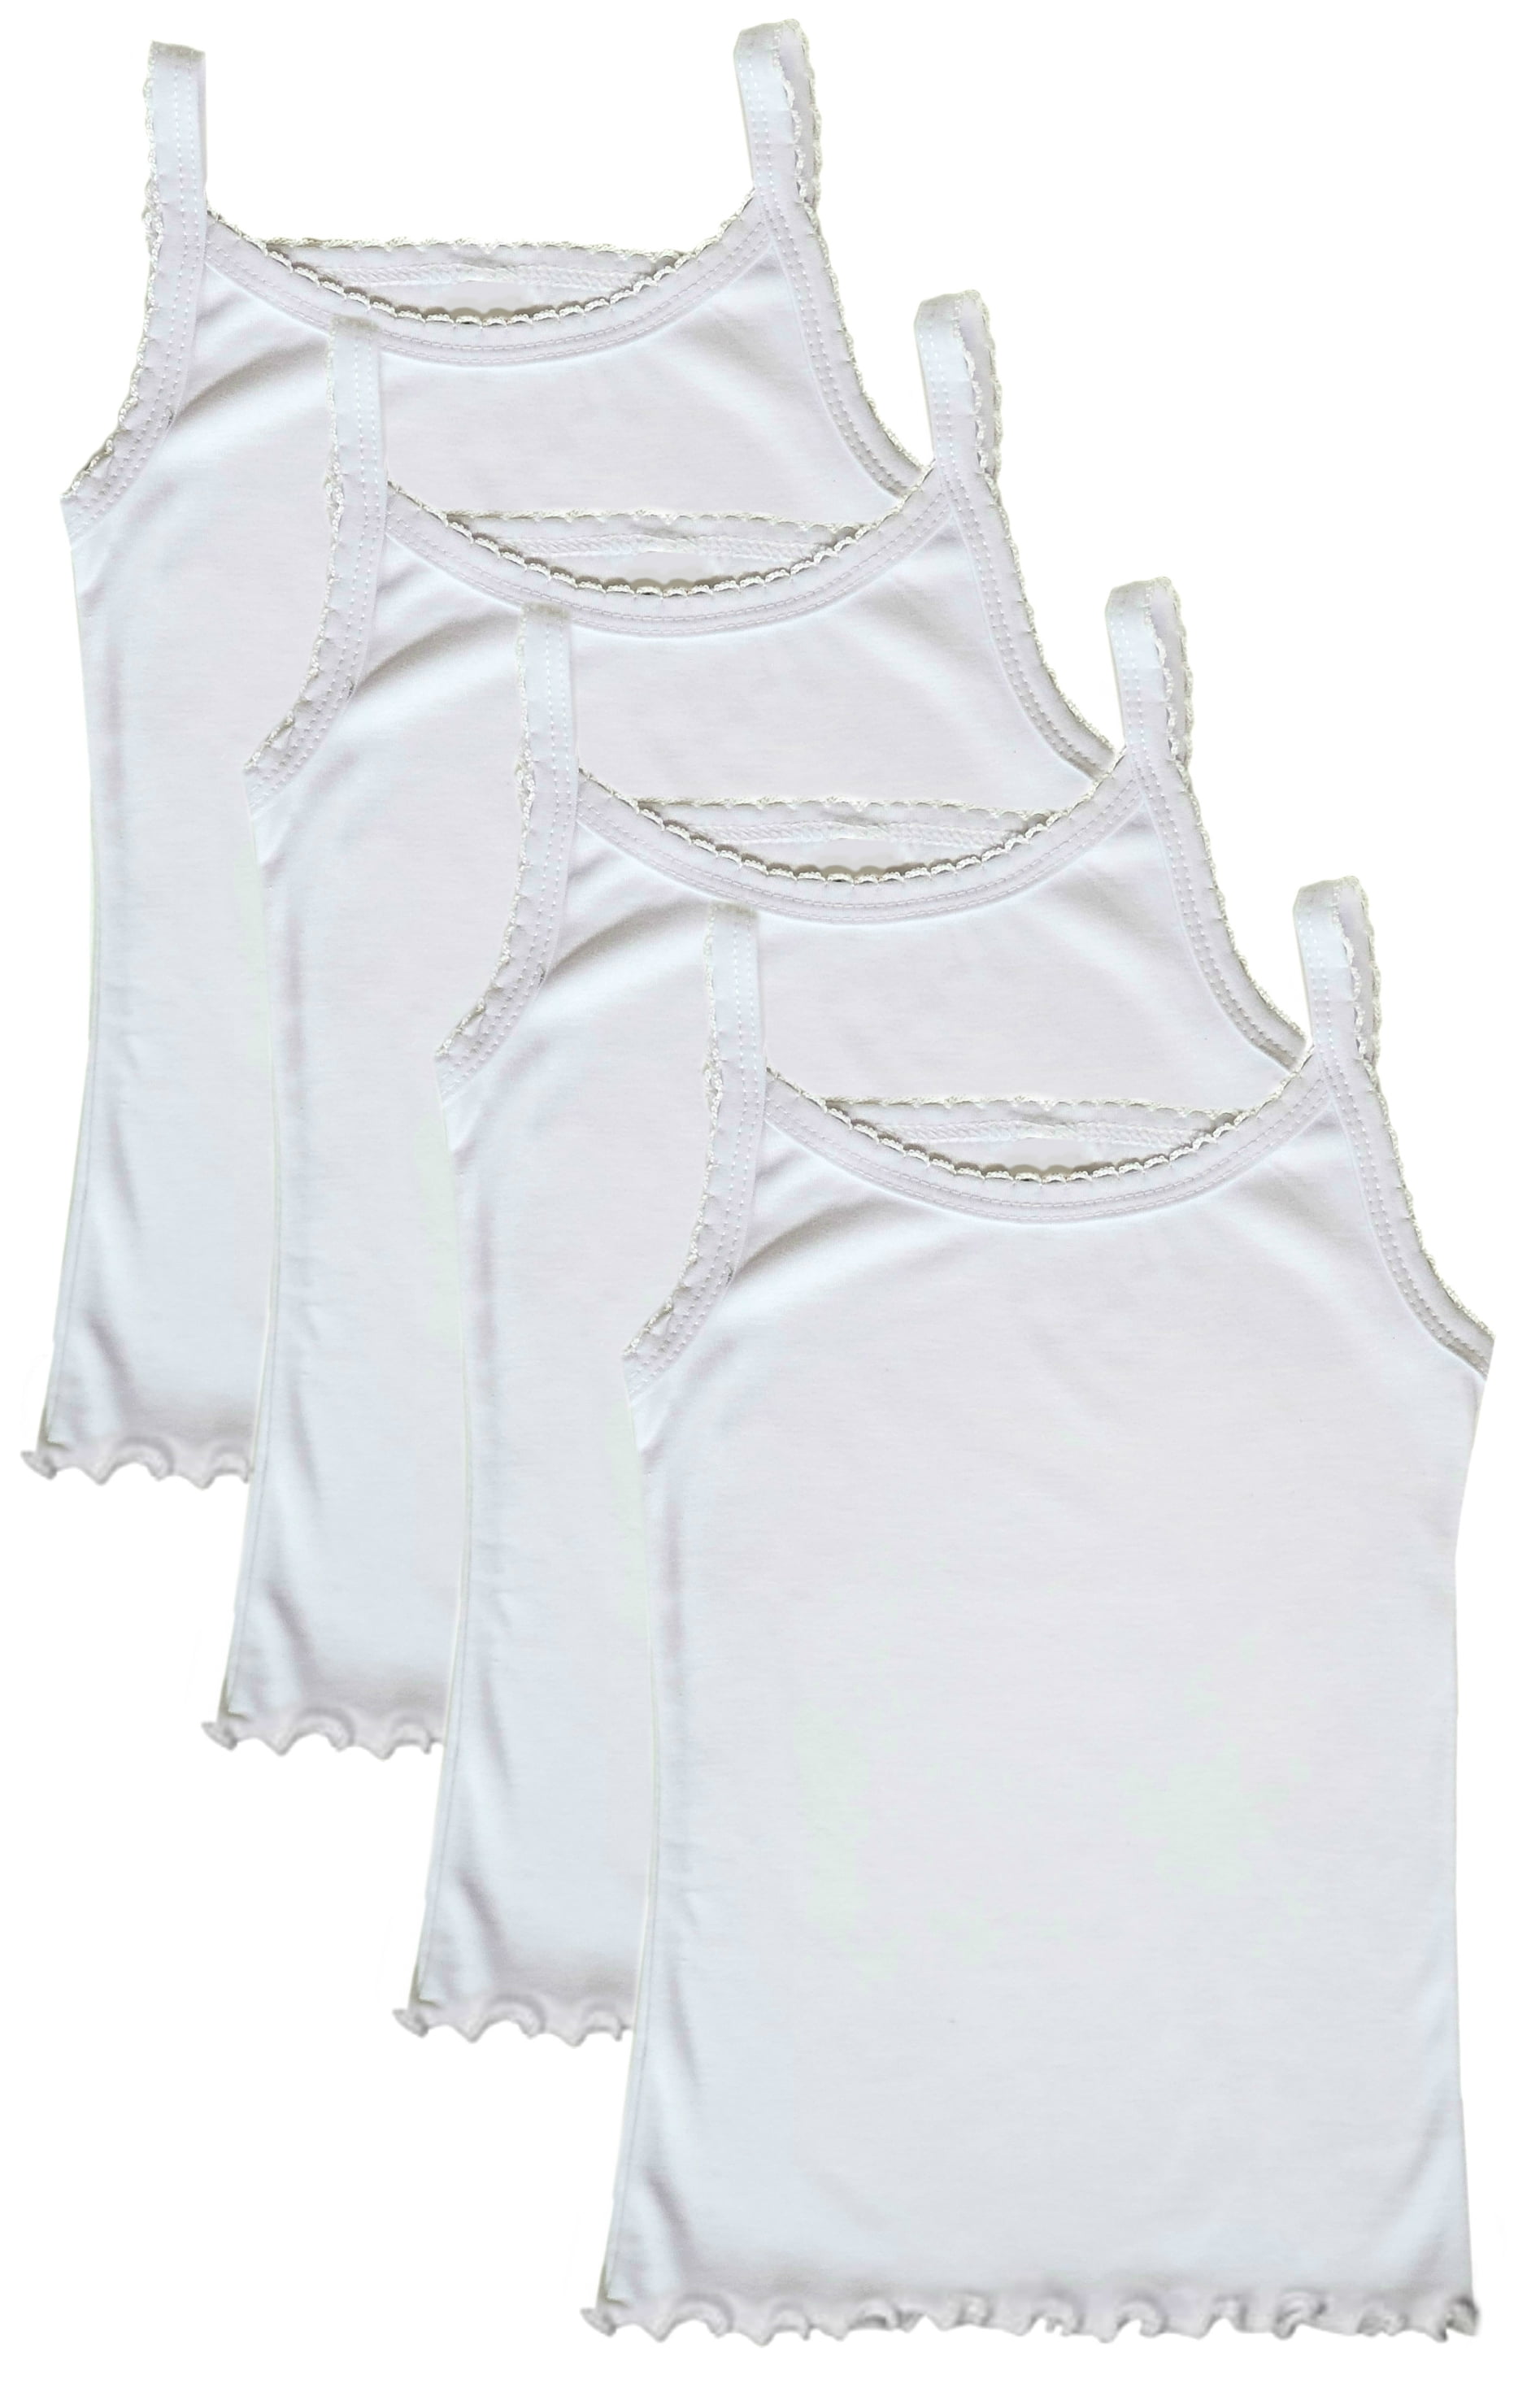 B-One Kids Girls' Cotton Camisole Tank Top Undershirt (Multipack